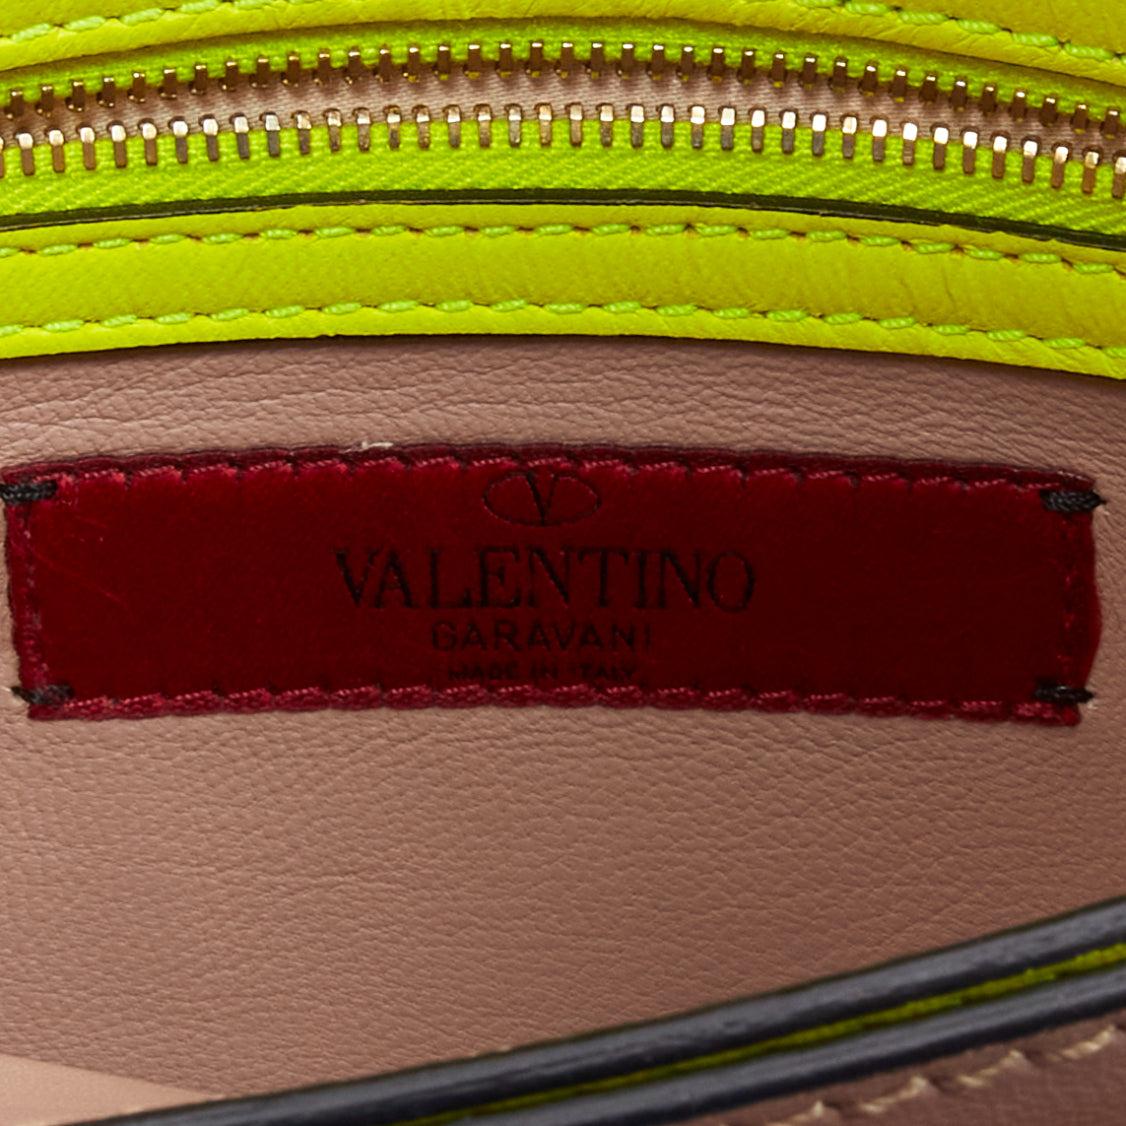 VALENTINO Rockstud neon yellow studded leather flap wristlet clutch bag 7